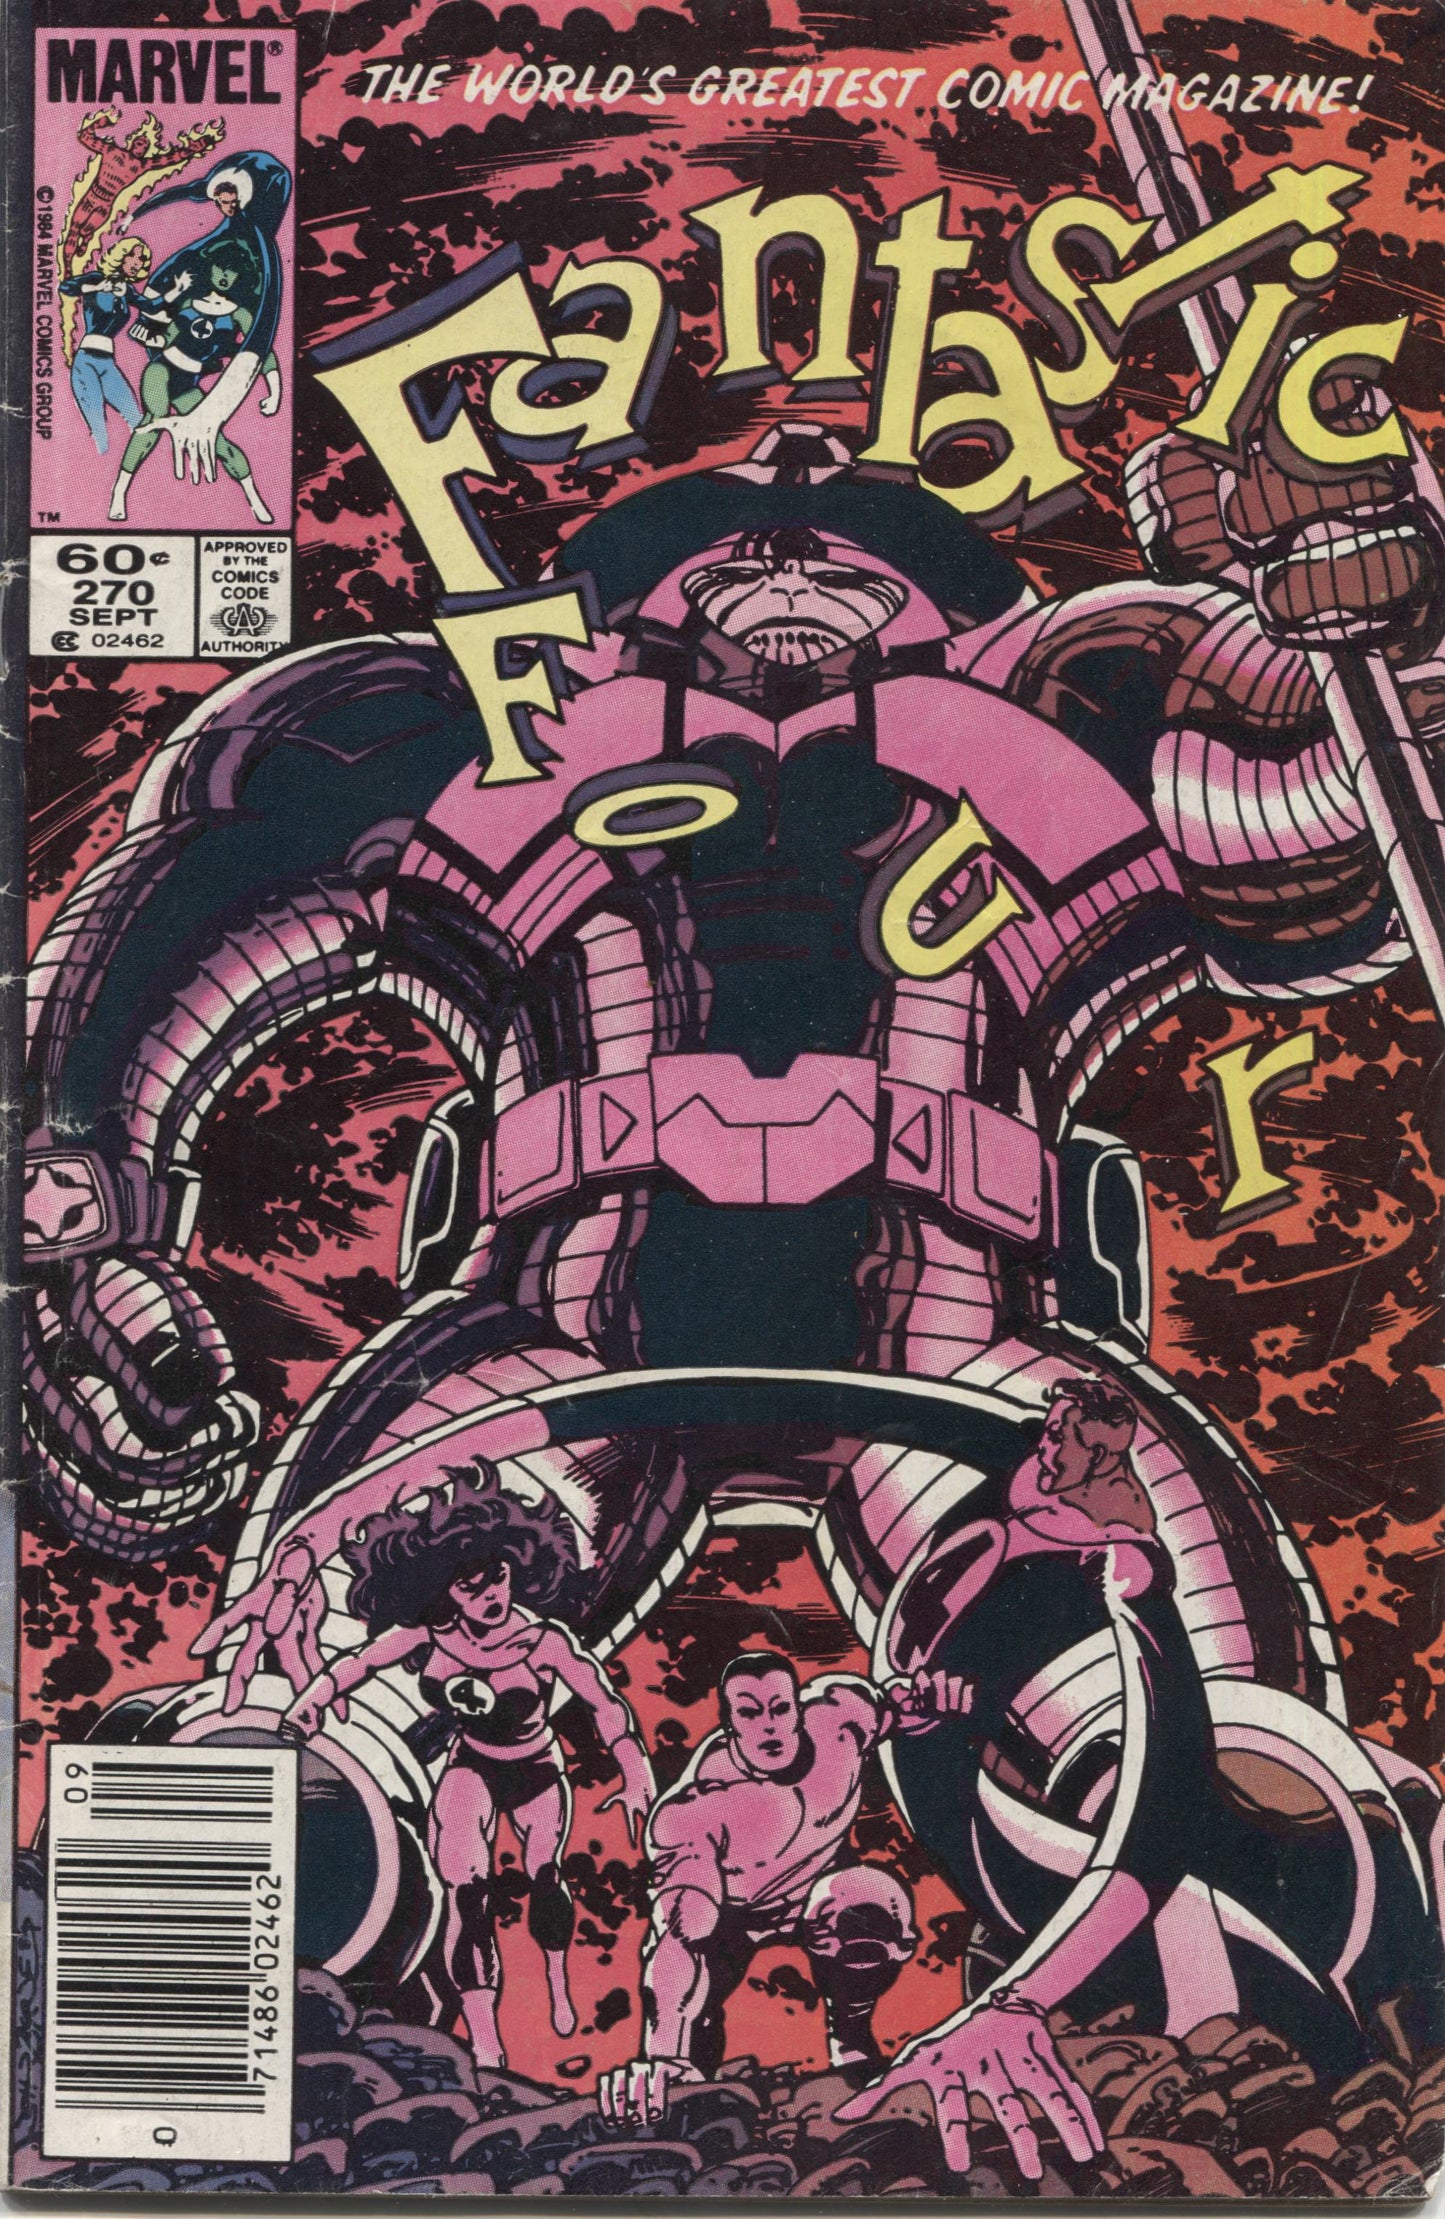 Fantastic Four No. 270, Marvel Comics, September 1984